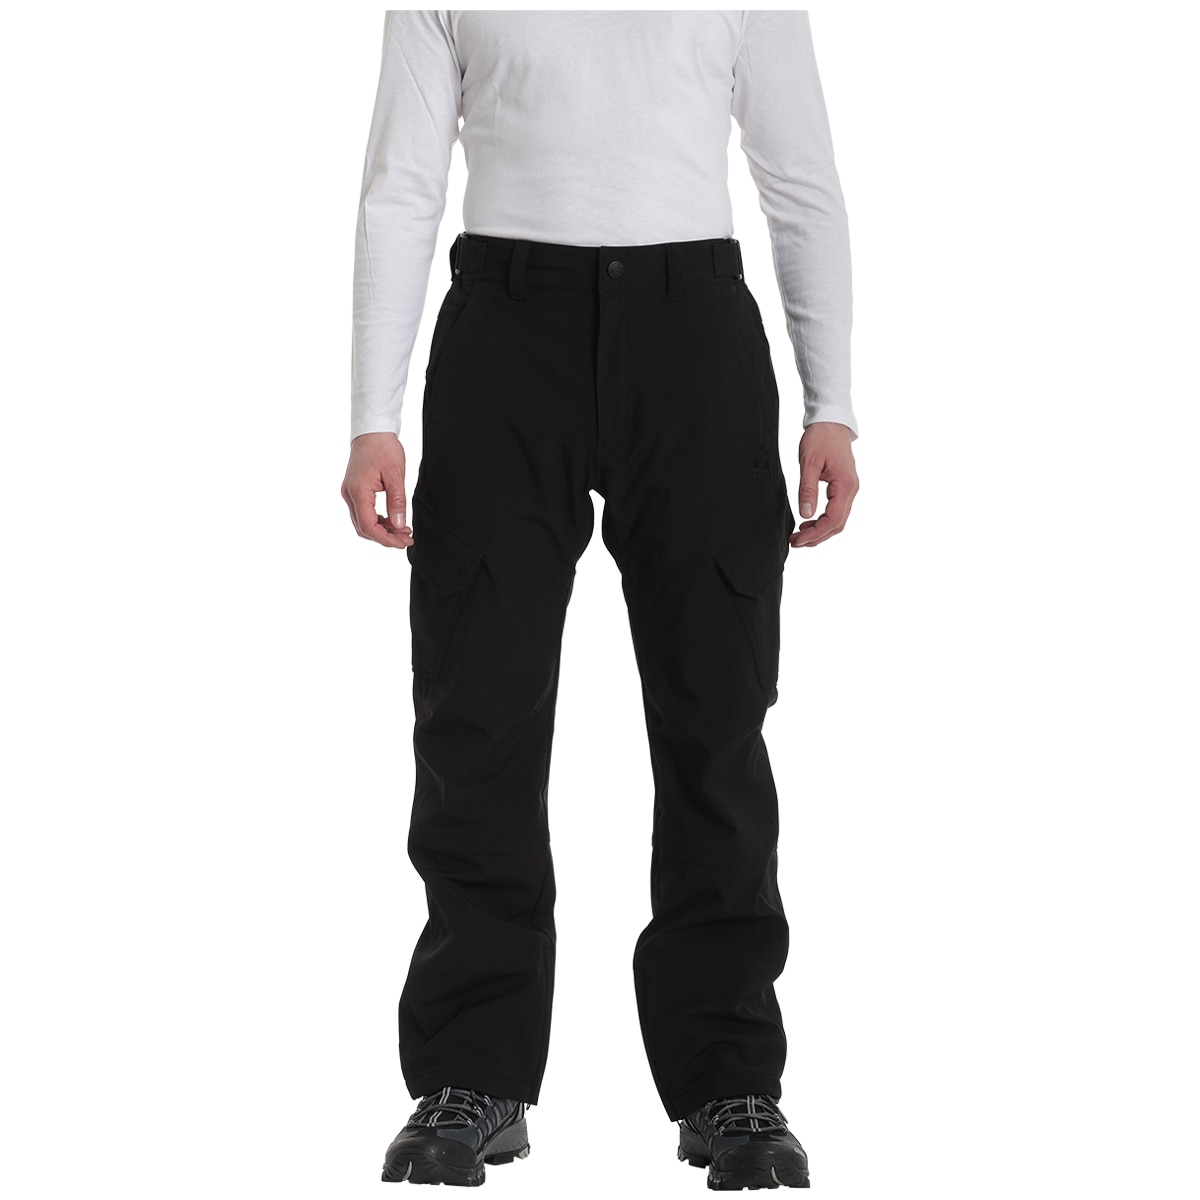 Gerry Men's Ski pants - Black